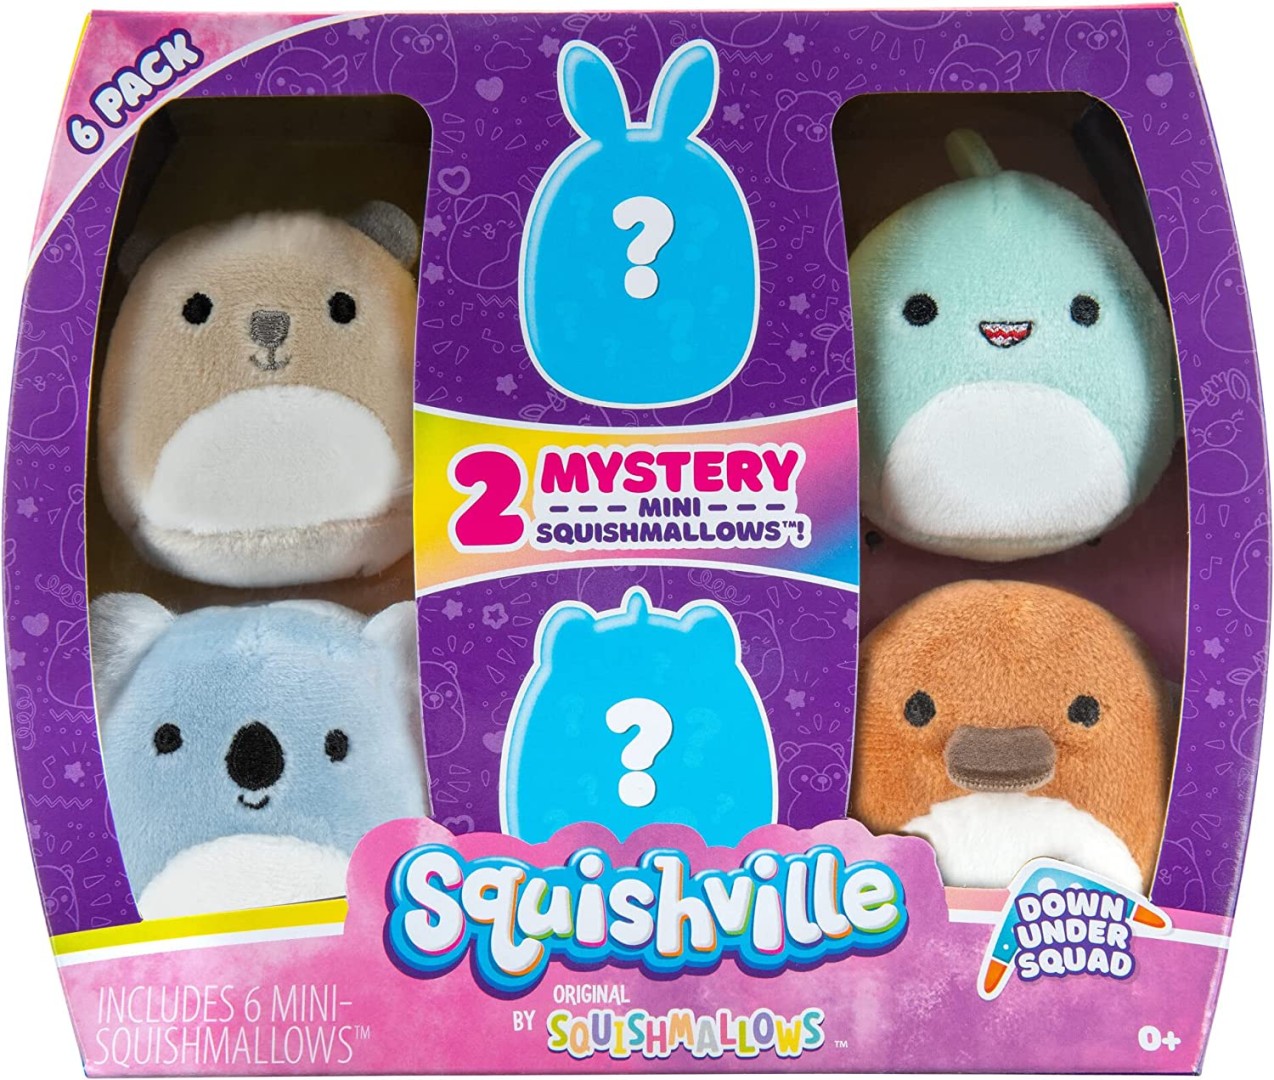 NIP Mini Squishville Mystety Pack Bright Squad 2 inch Squishmallow